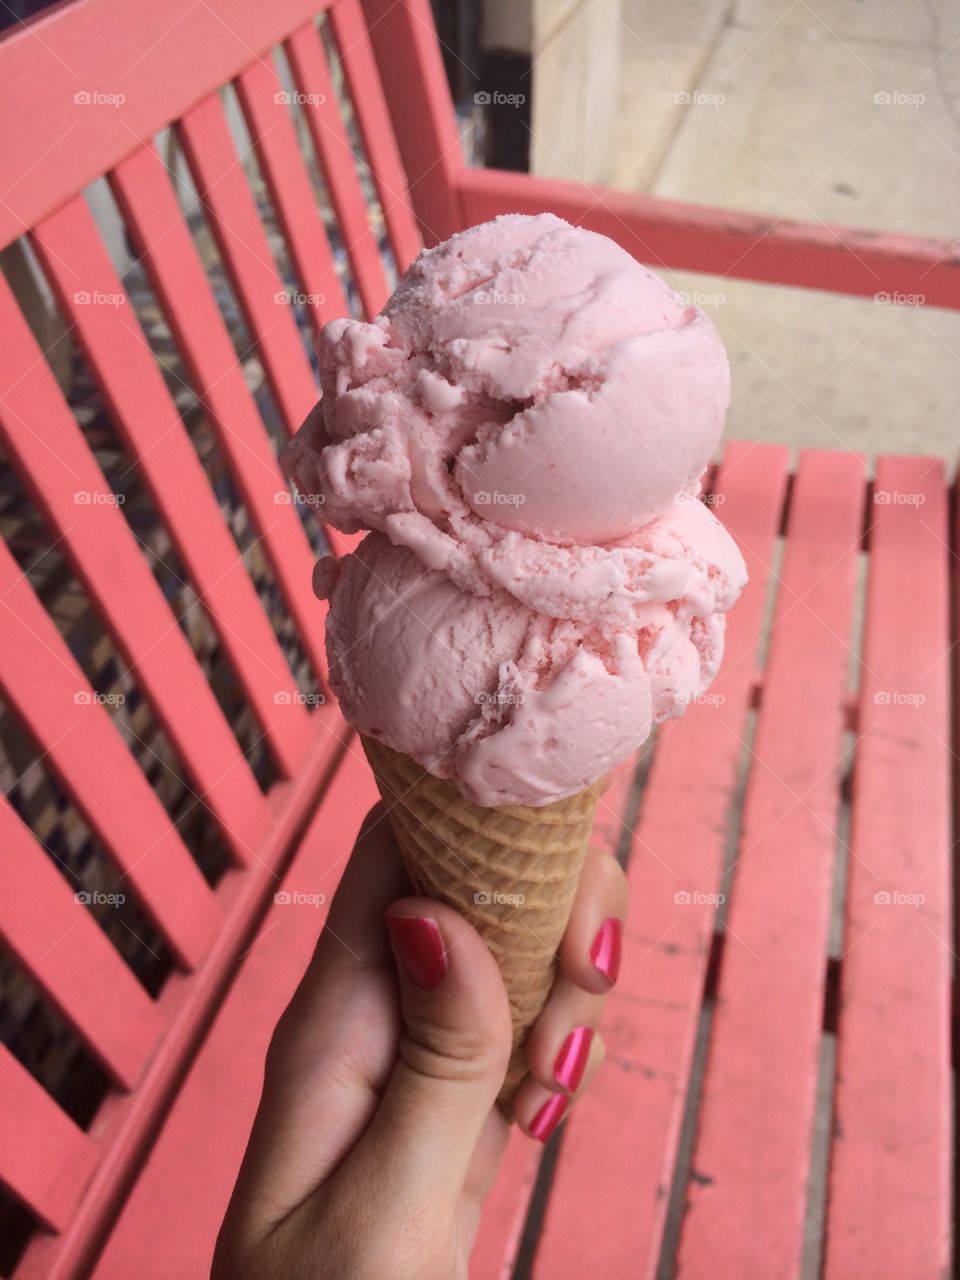 Pretty in Pink 2. Taken at Bobtail Ice Cream in Chicago 